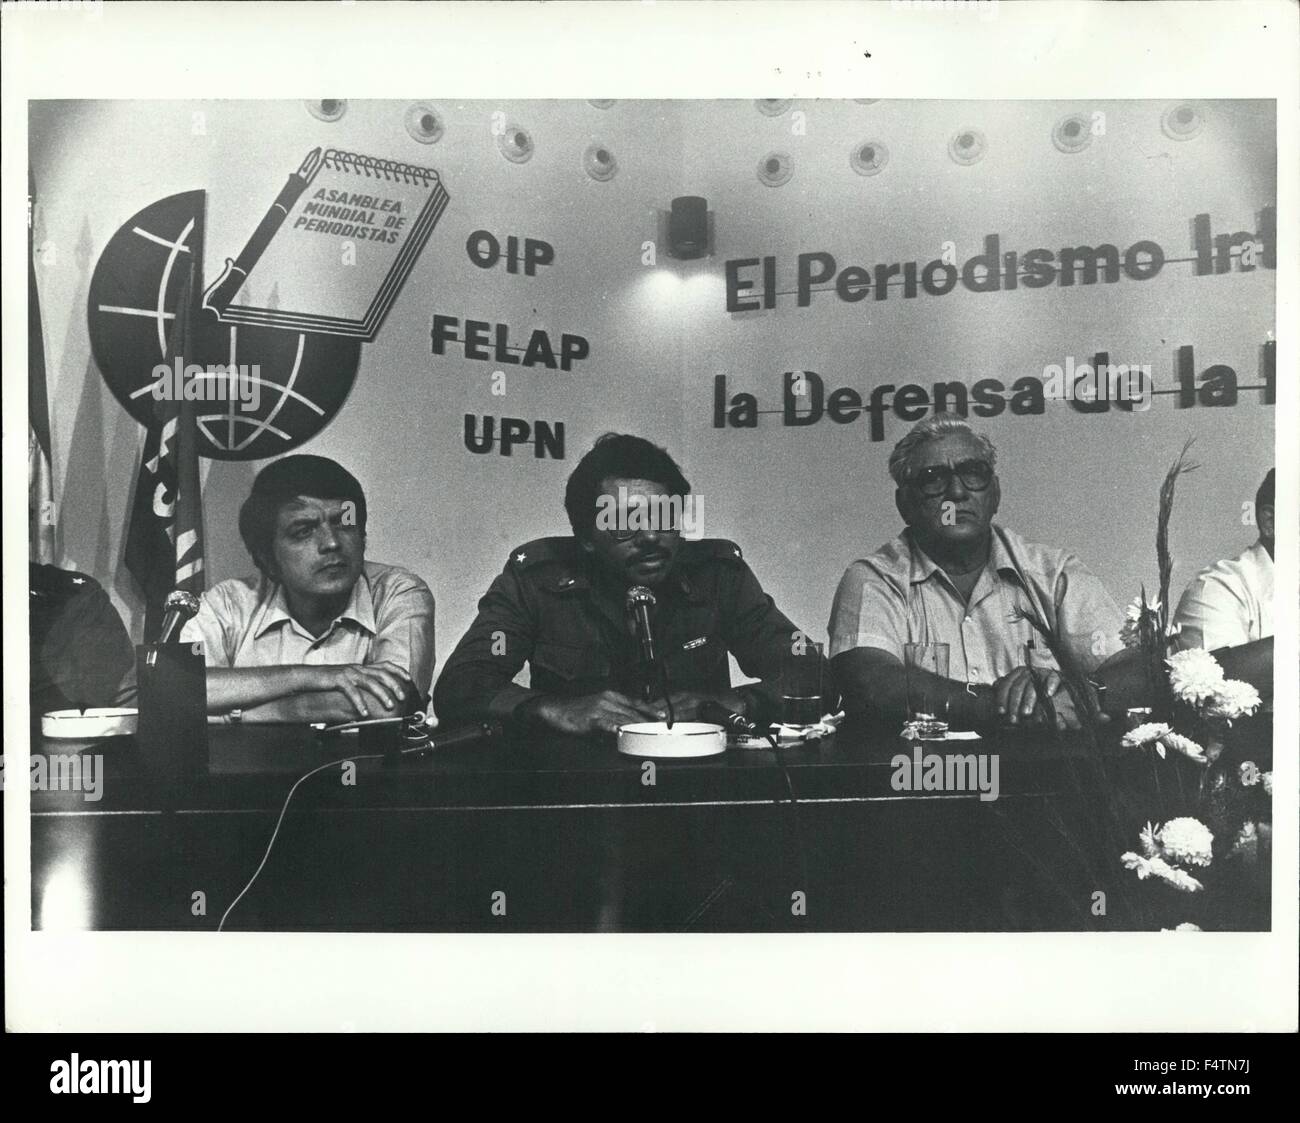 1963 - Maraqau - Nicaraqau 3 furling men of the government of l-R; Sergio Ramirez Daniel Ortega - coordinator Raphael Gordoua Rivas. © Keystone Pictures USA/ZUMAPRESS.com/Alamy Live News Stock Photo